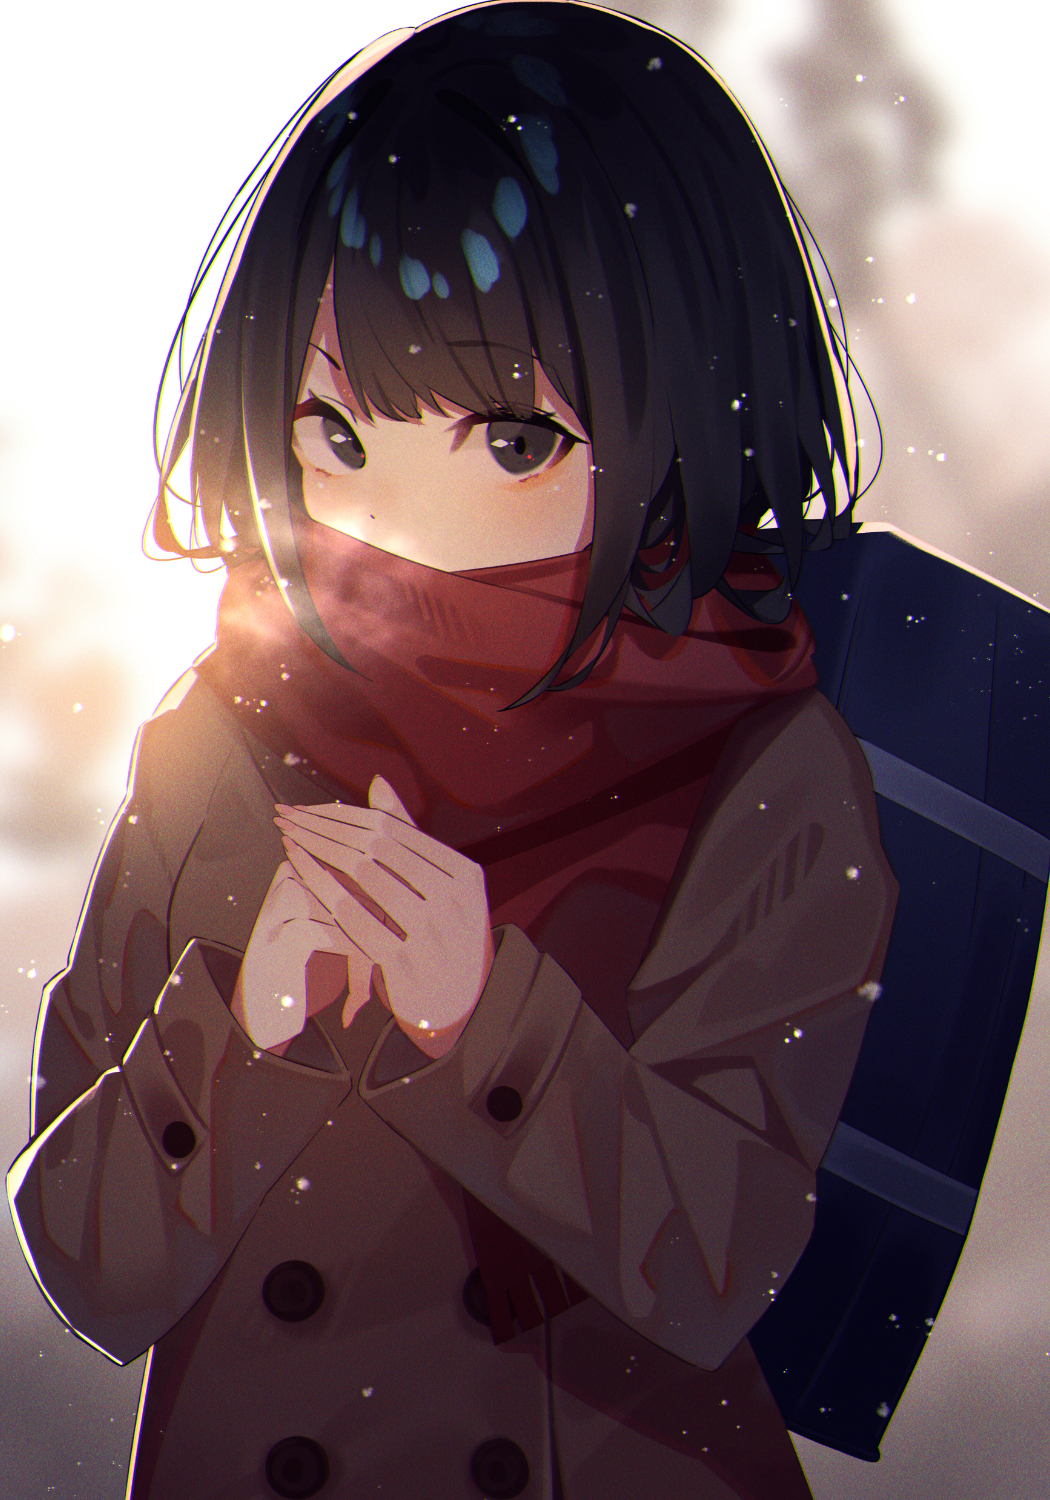 Anime 1050x1500 anime anime girls digital art artwork 2D portrait display dark eyes dark hair cold kisui coats scarf